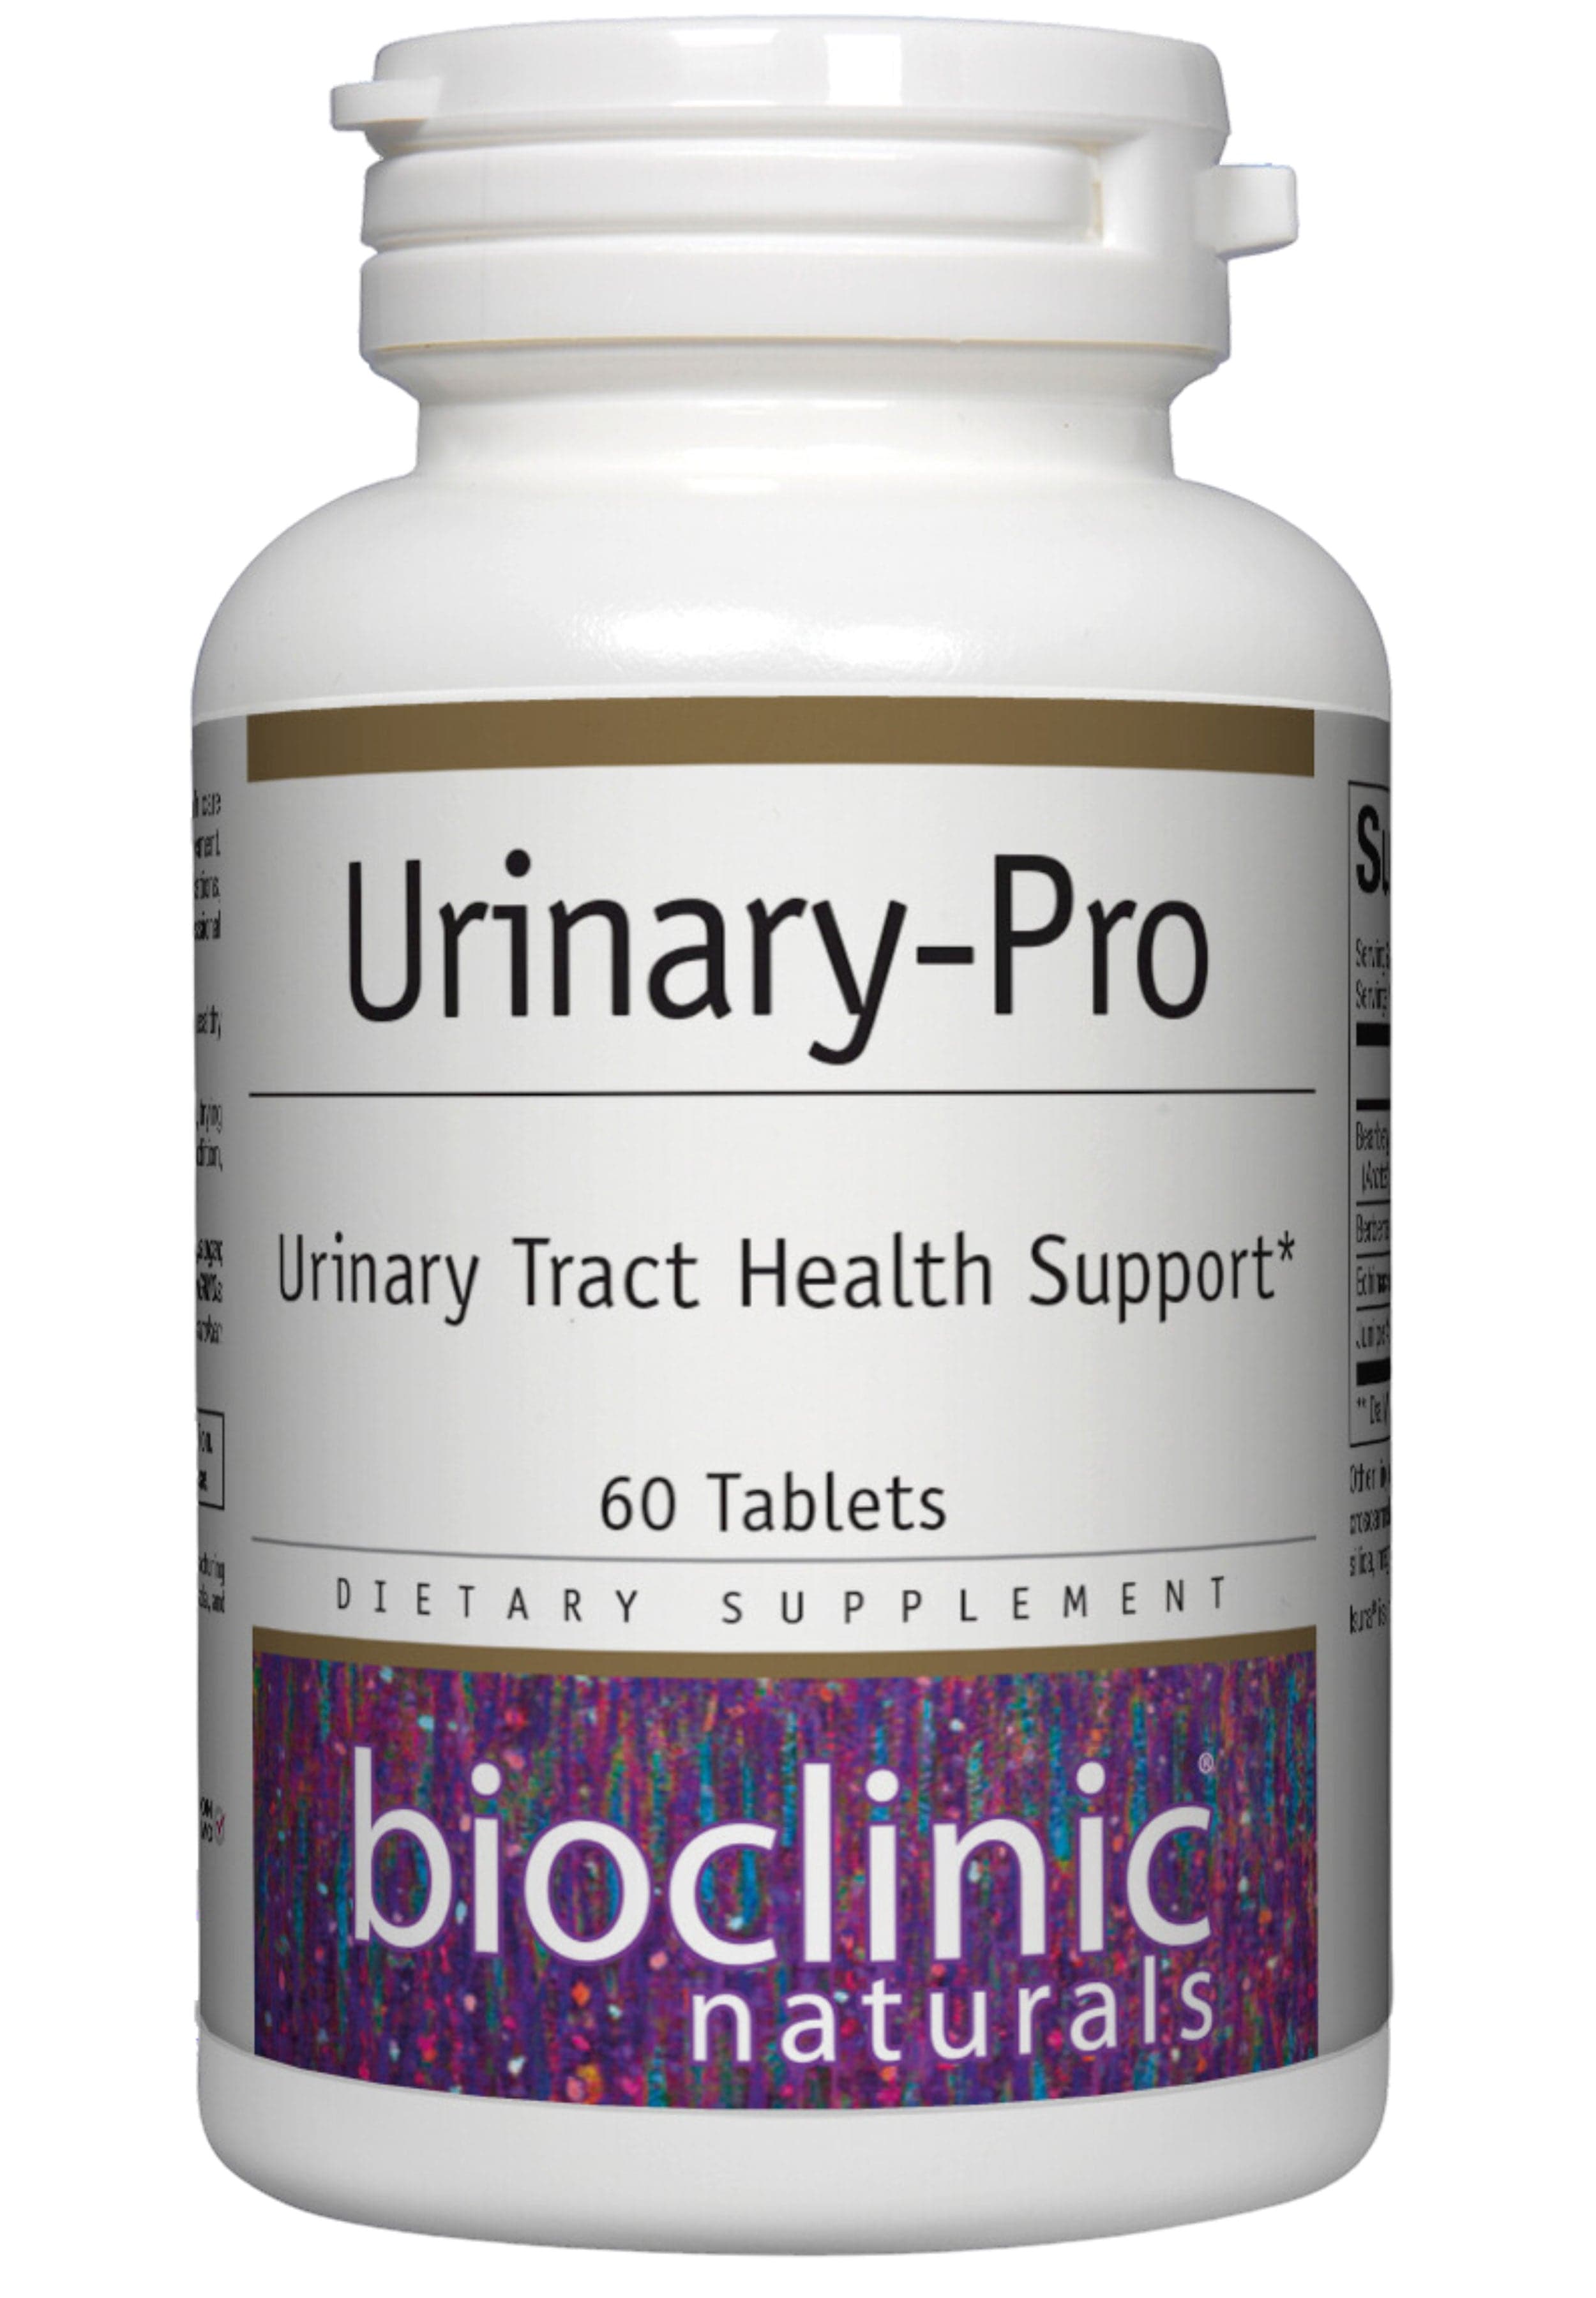 Bioclinic Naturals Urinary-Pro